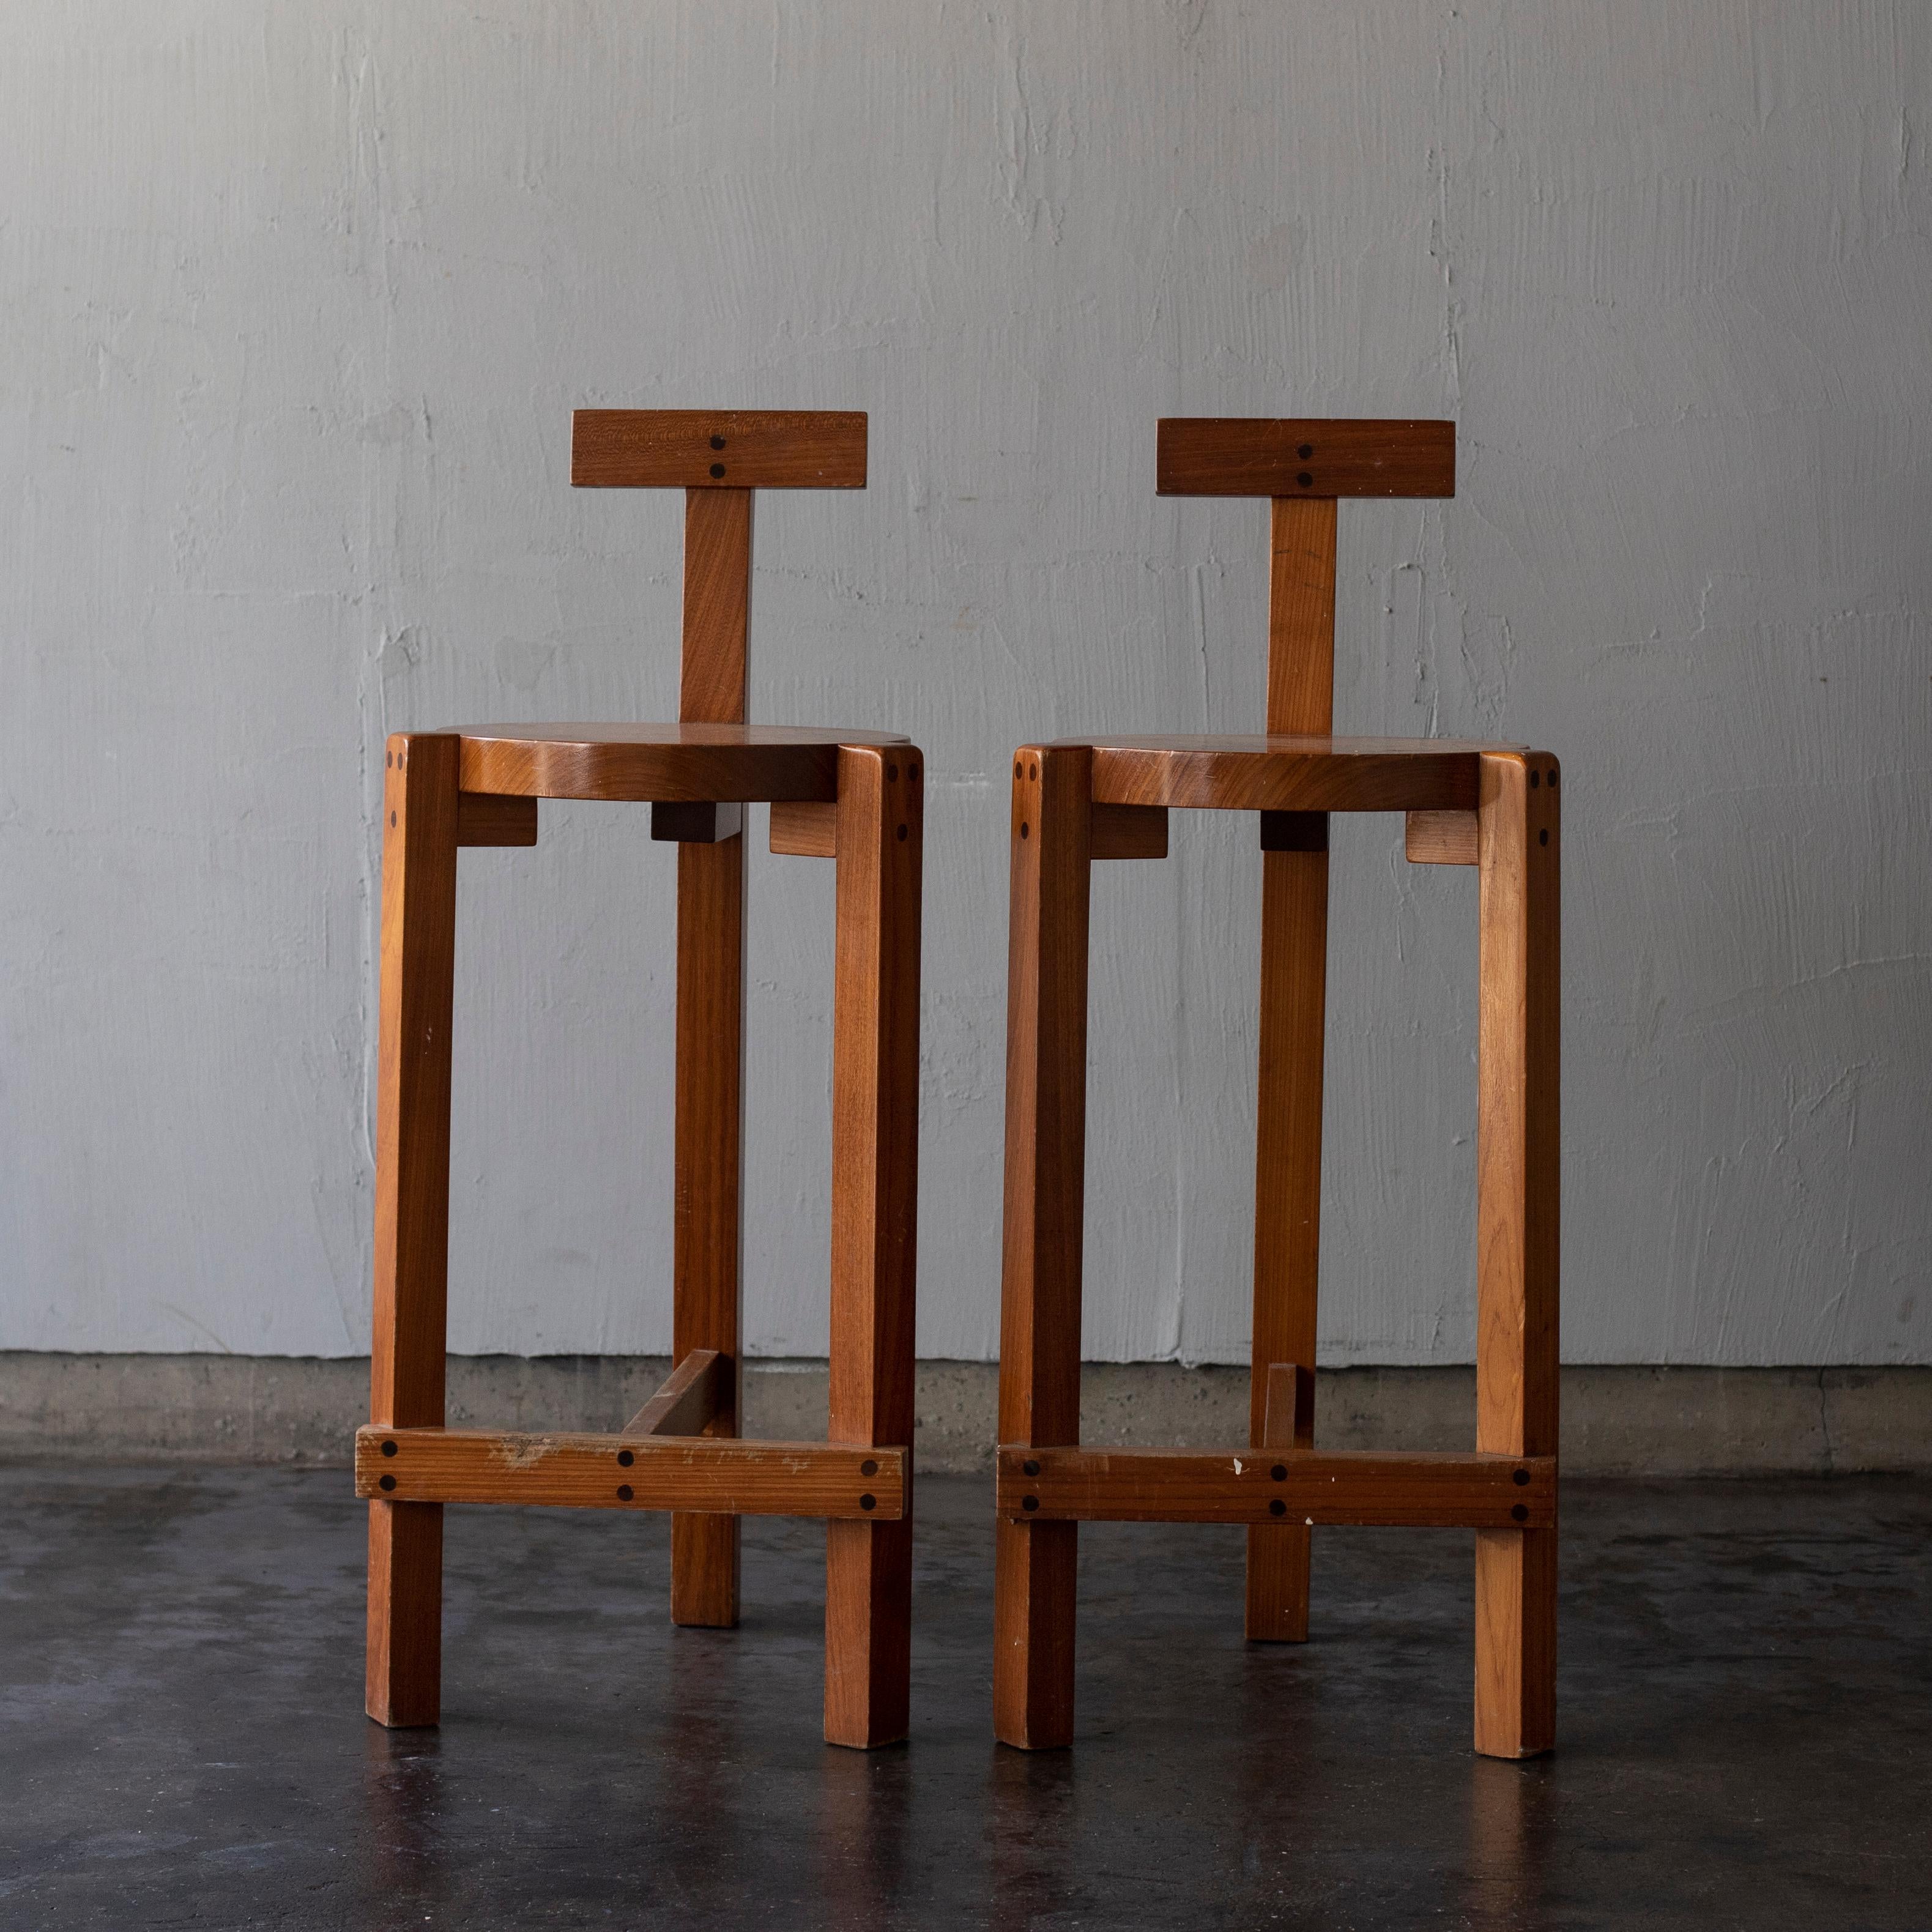 Giraffe chair designed by Lina Bo Bardi, Marcelo Ferraz and Marcelo Suzuki.
Manufactured by Baraúna.